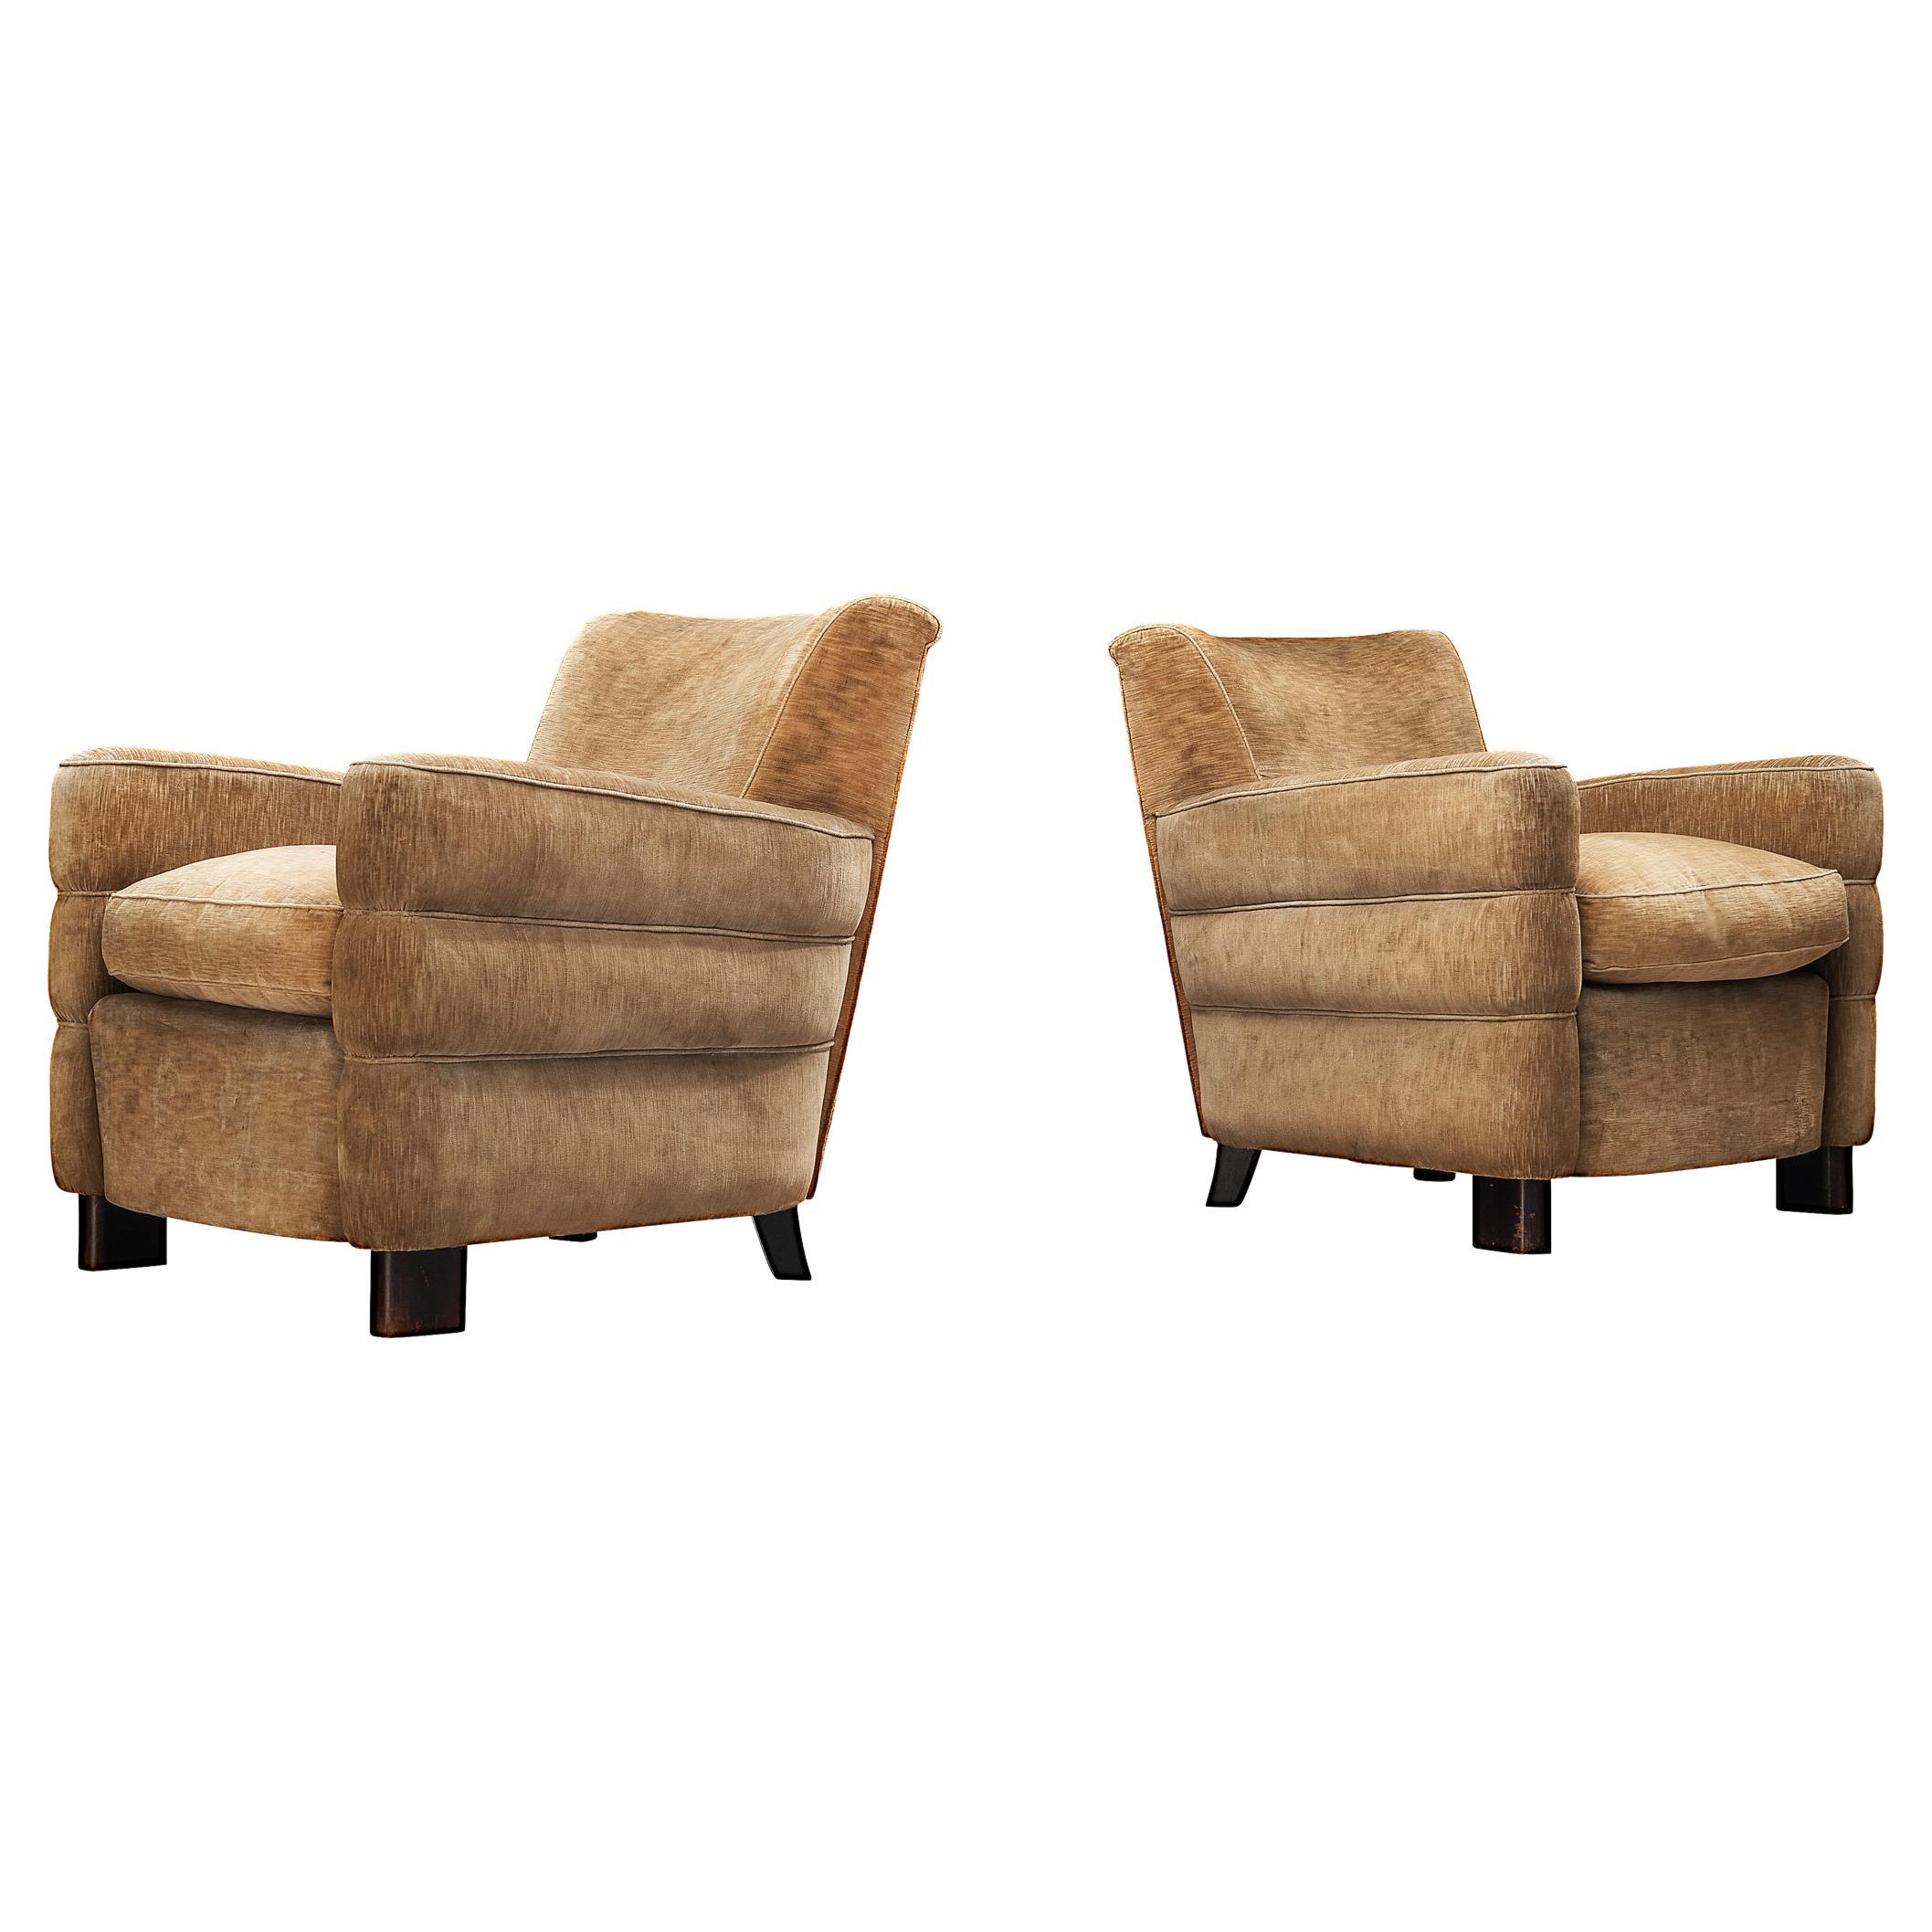 Guglielmo Ulrich Art Deco Lounge Chairs in Beige Upholstery